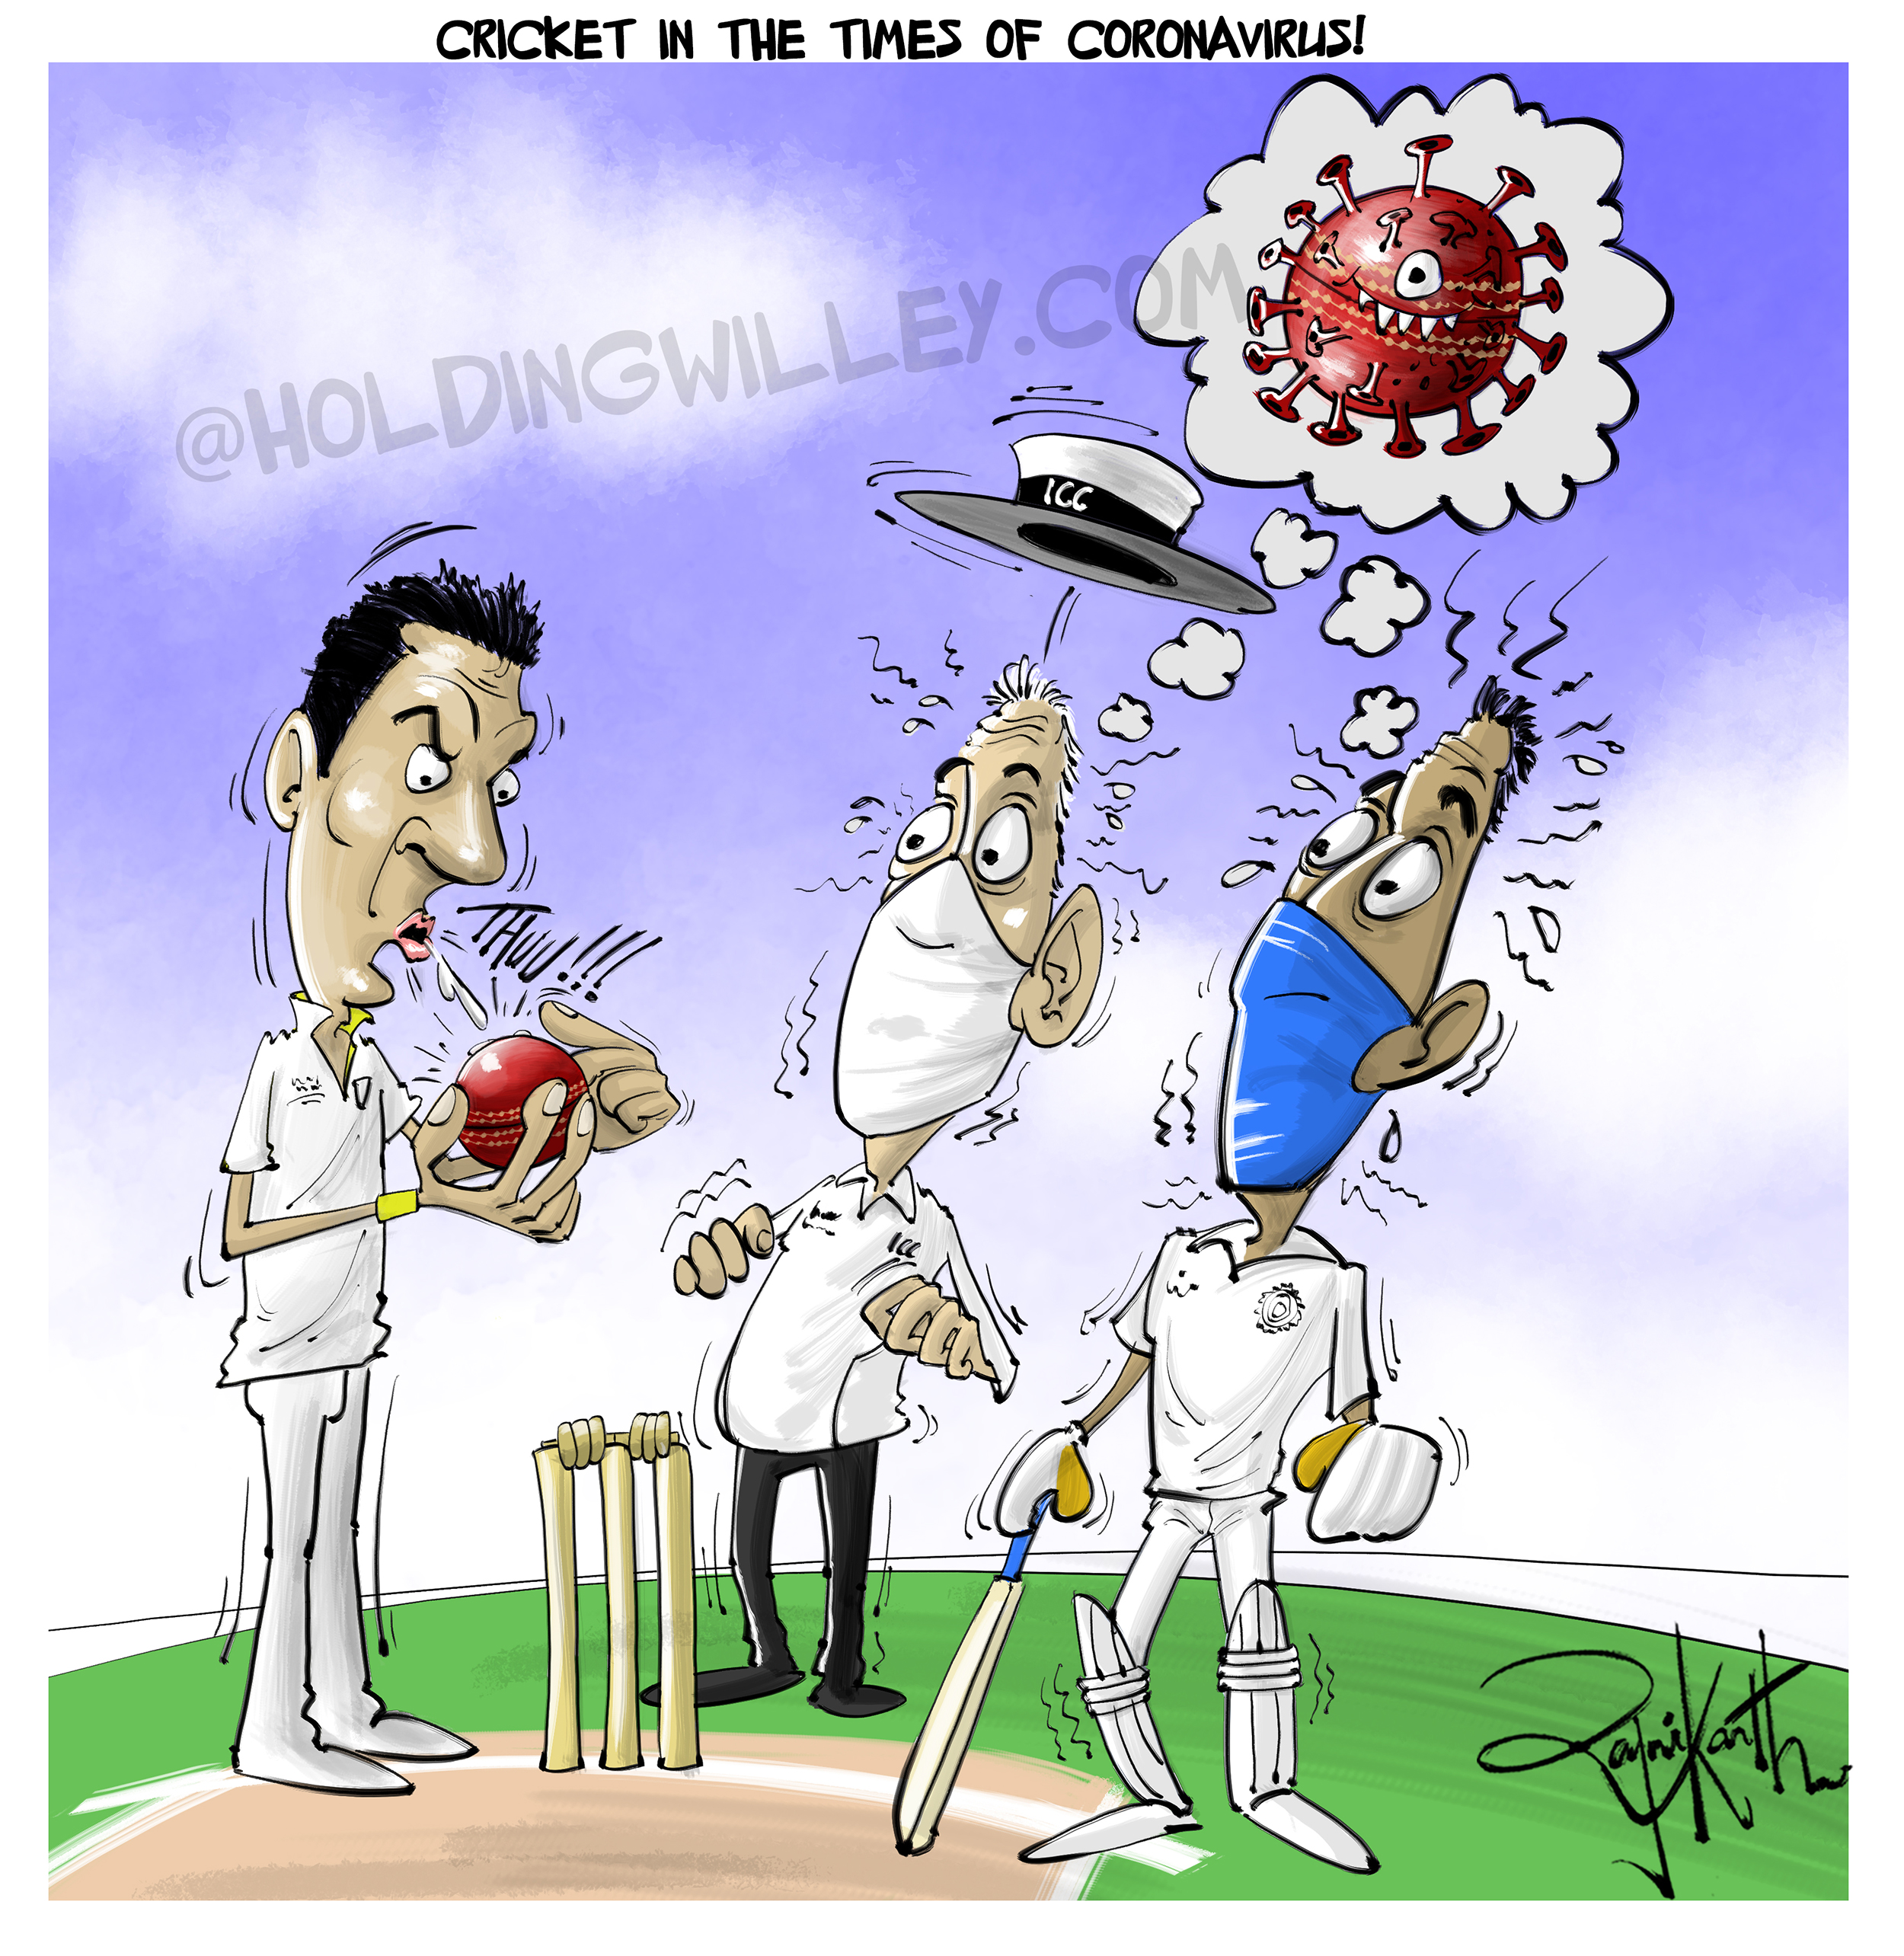 Coronavirus_effects_Cricket